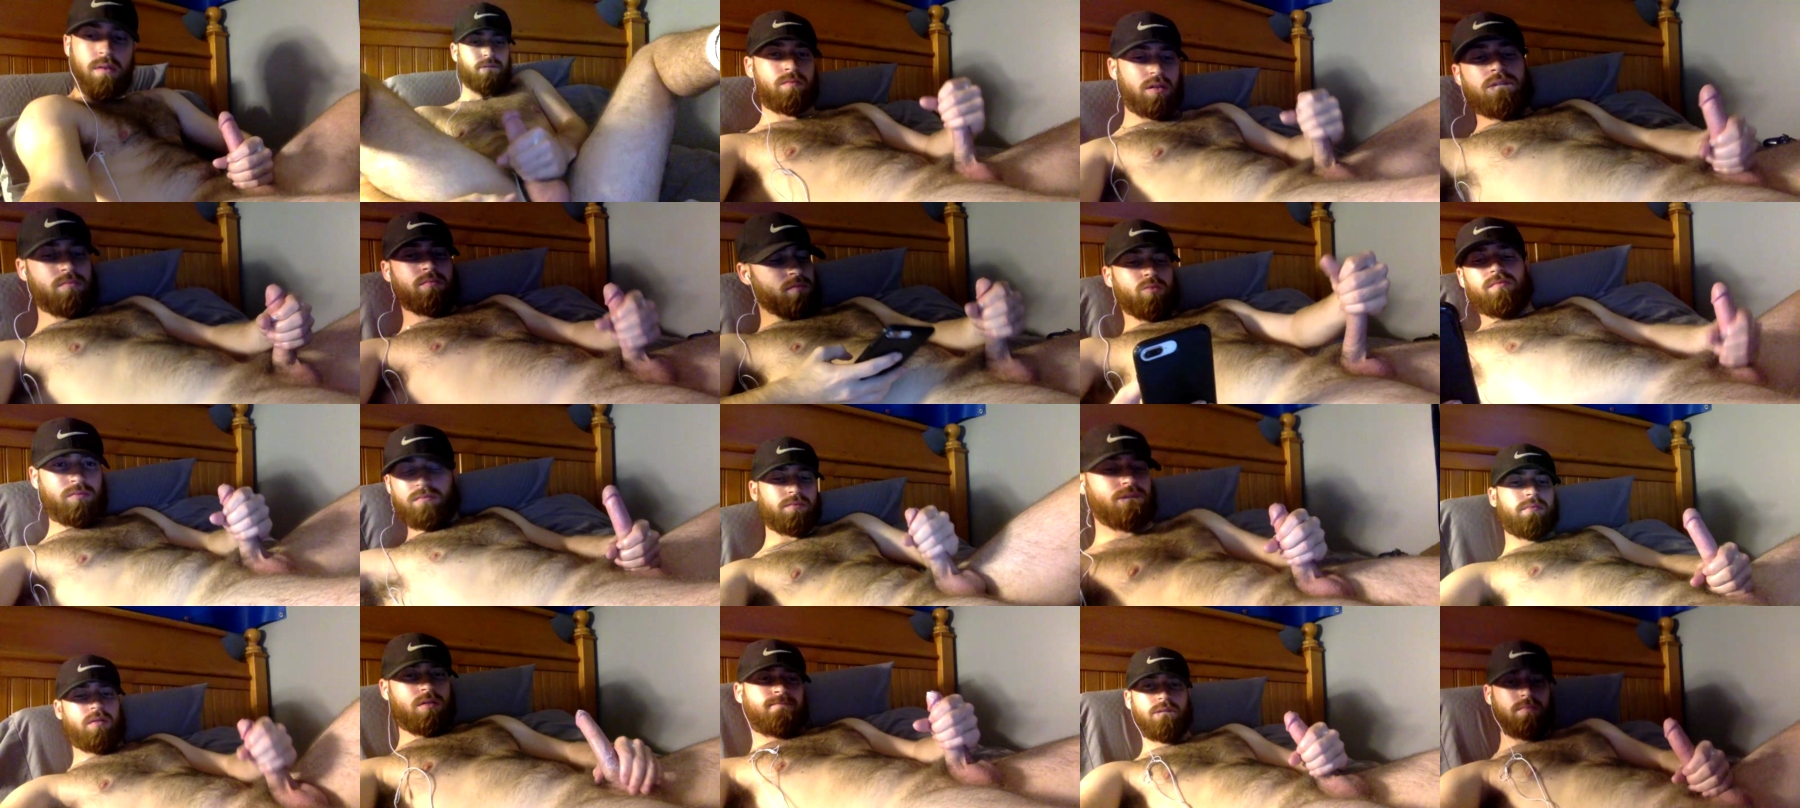 Moneymitch2  17-11-2021 Male Webcam